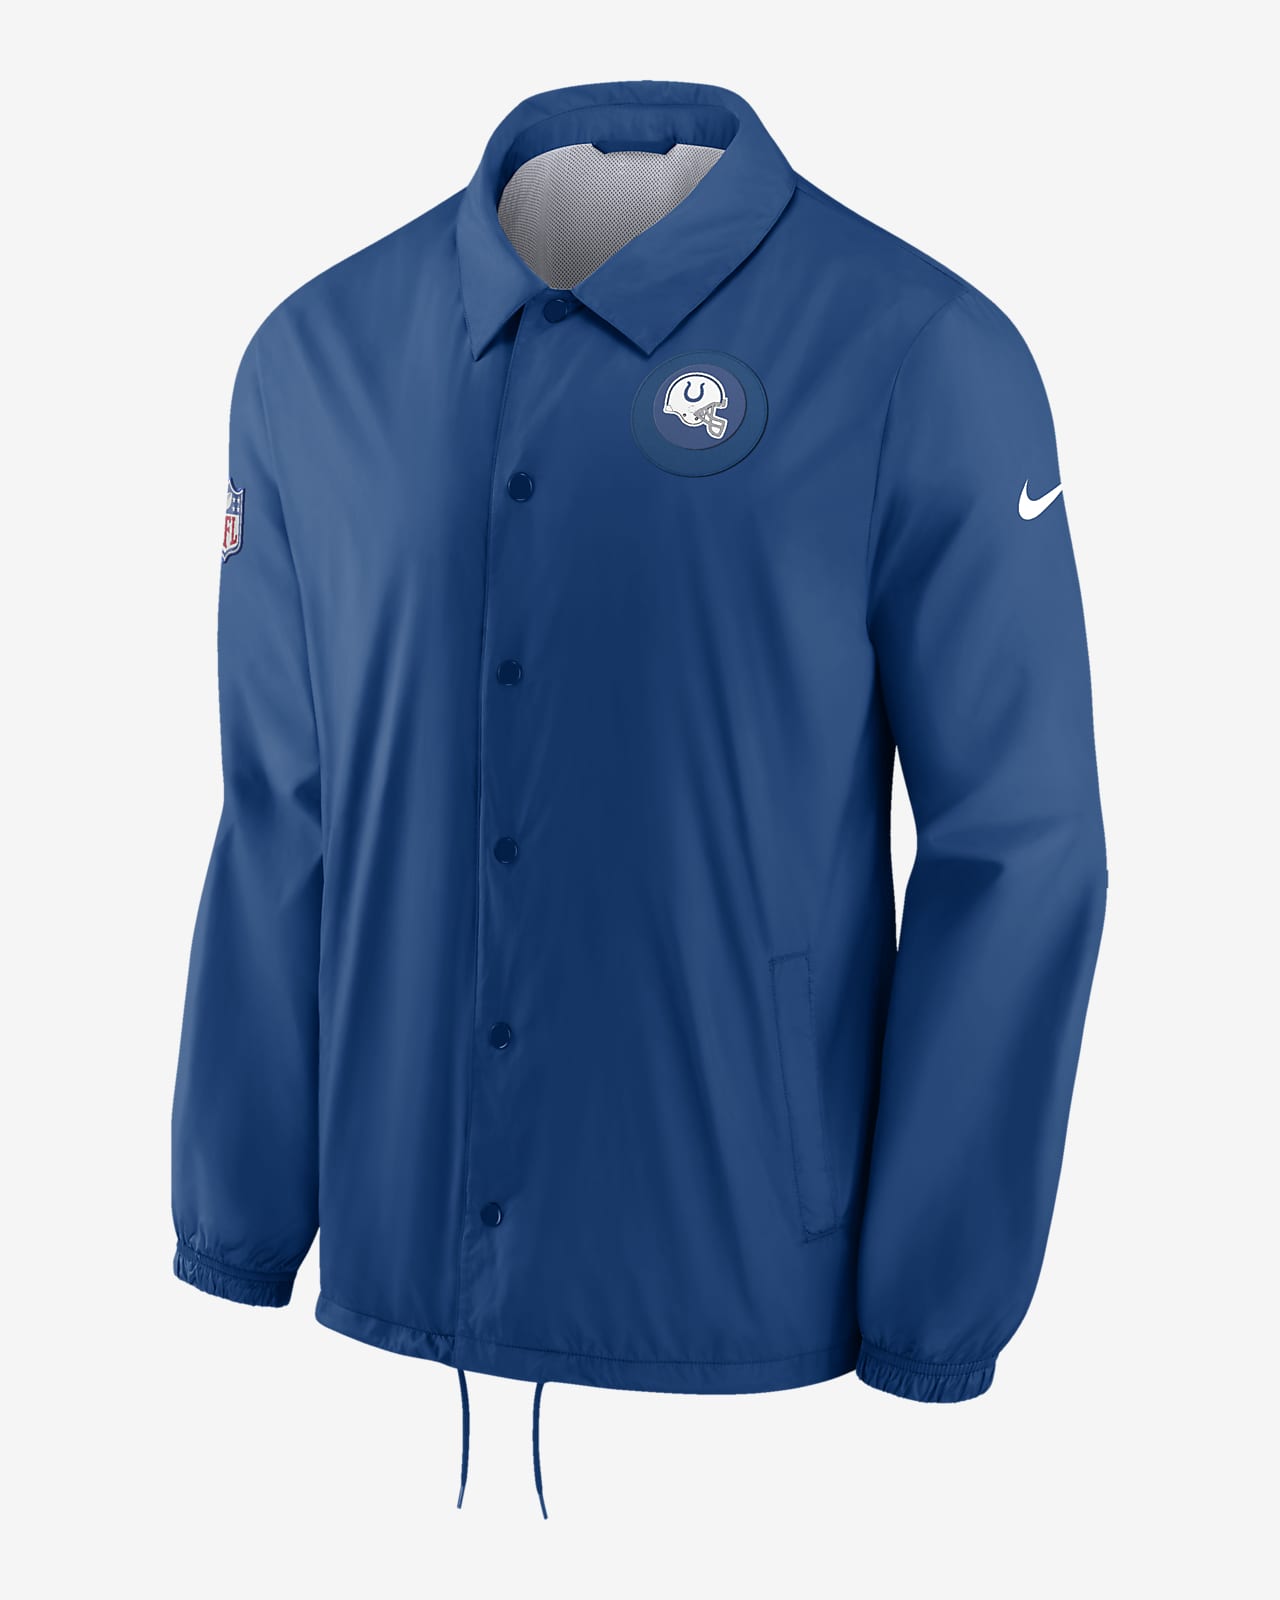 Chamarra para hombre Nike Coaches (NFL Indianapolis Colts)